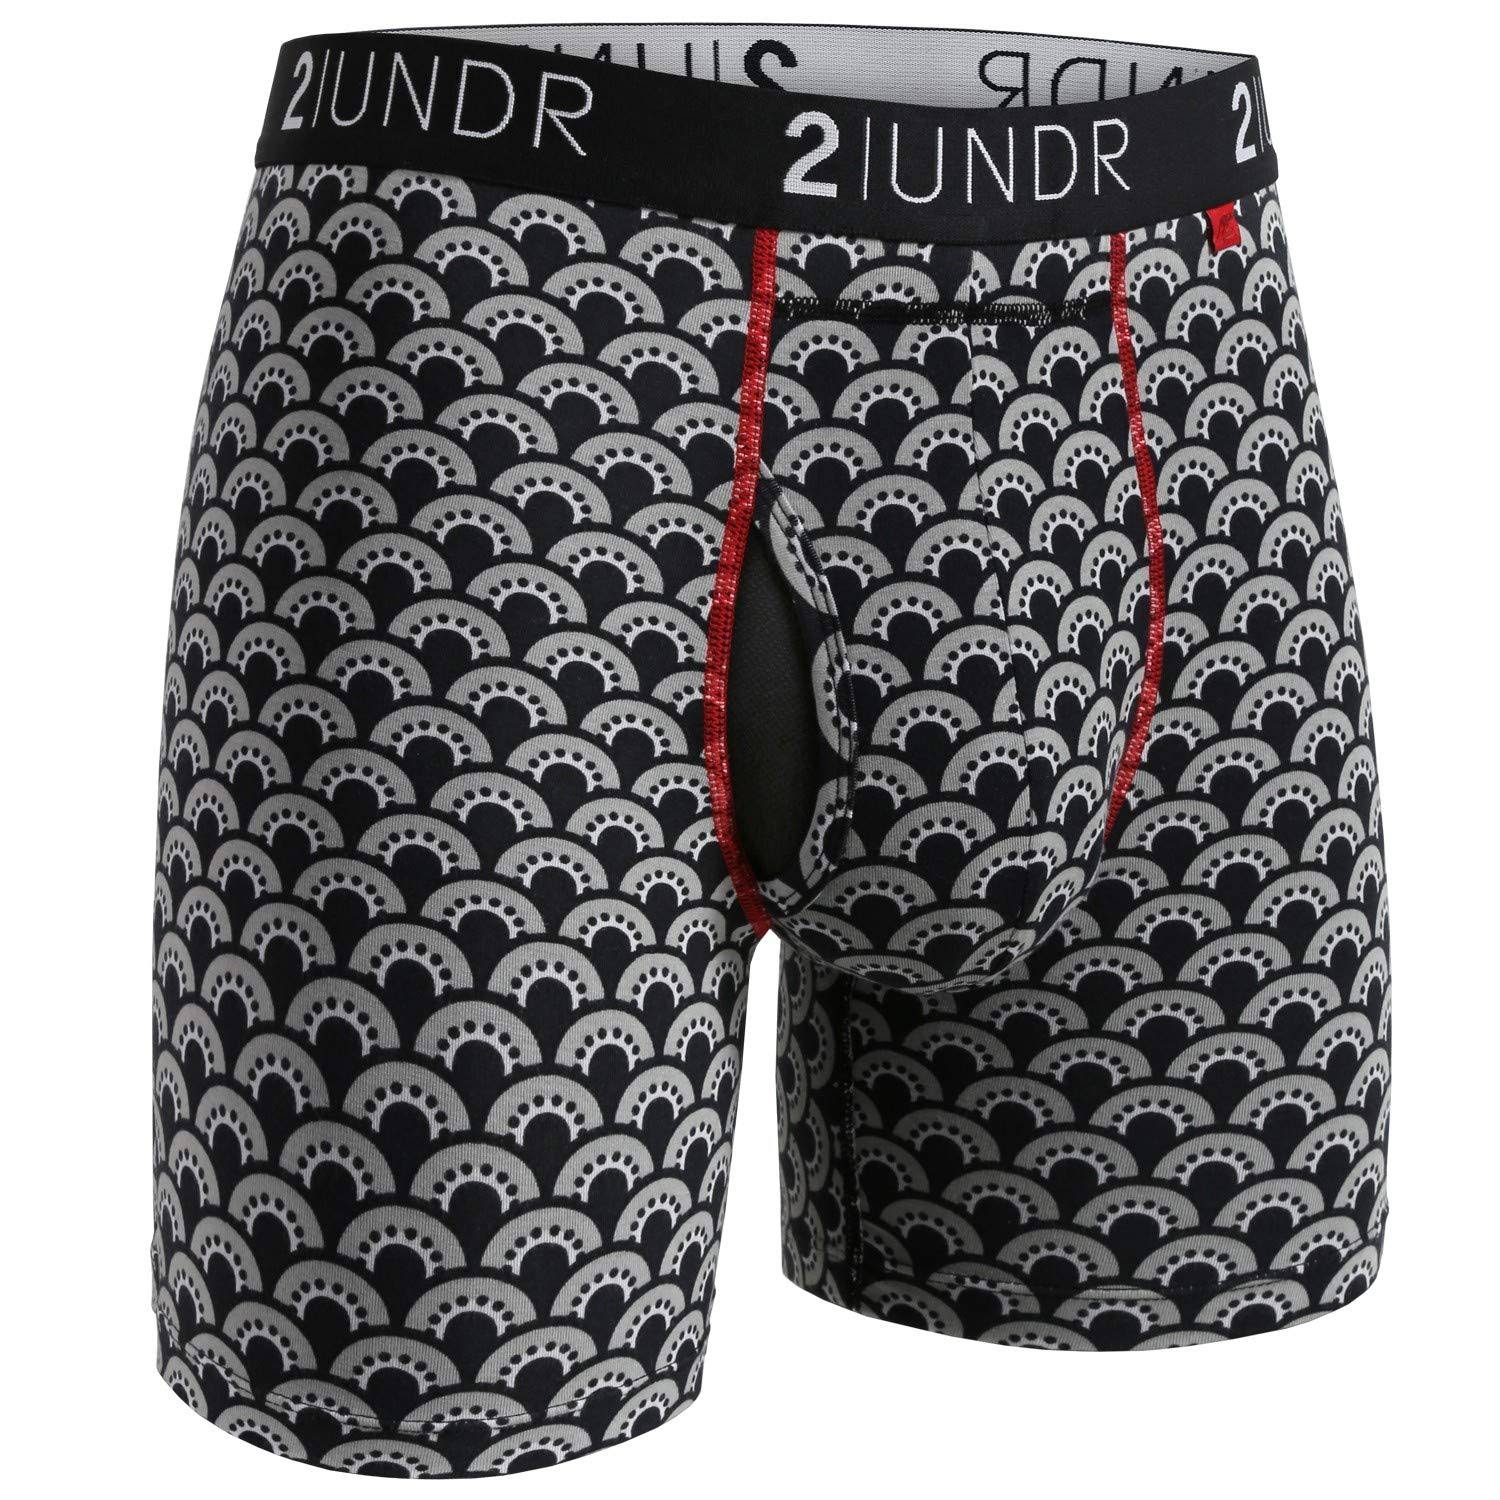 2UNDR Men's Swing Shift 6" Boxer Brief Underwear Limited Edition Colors - - Large